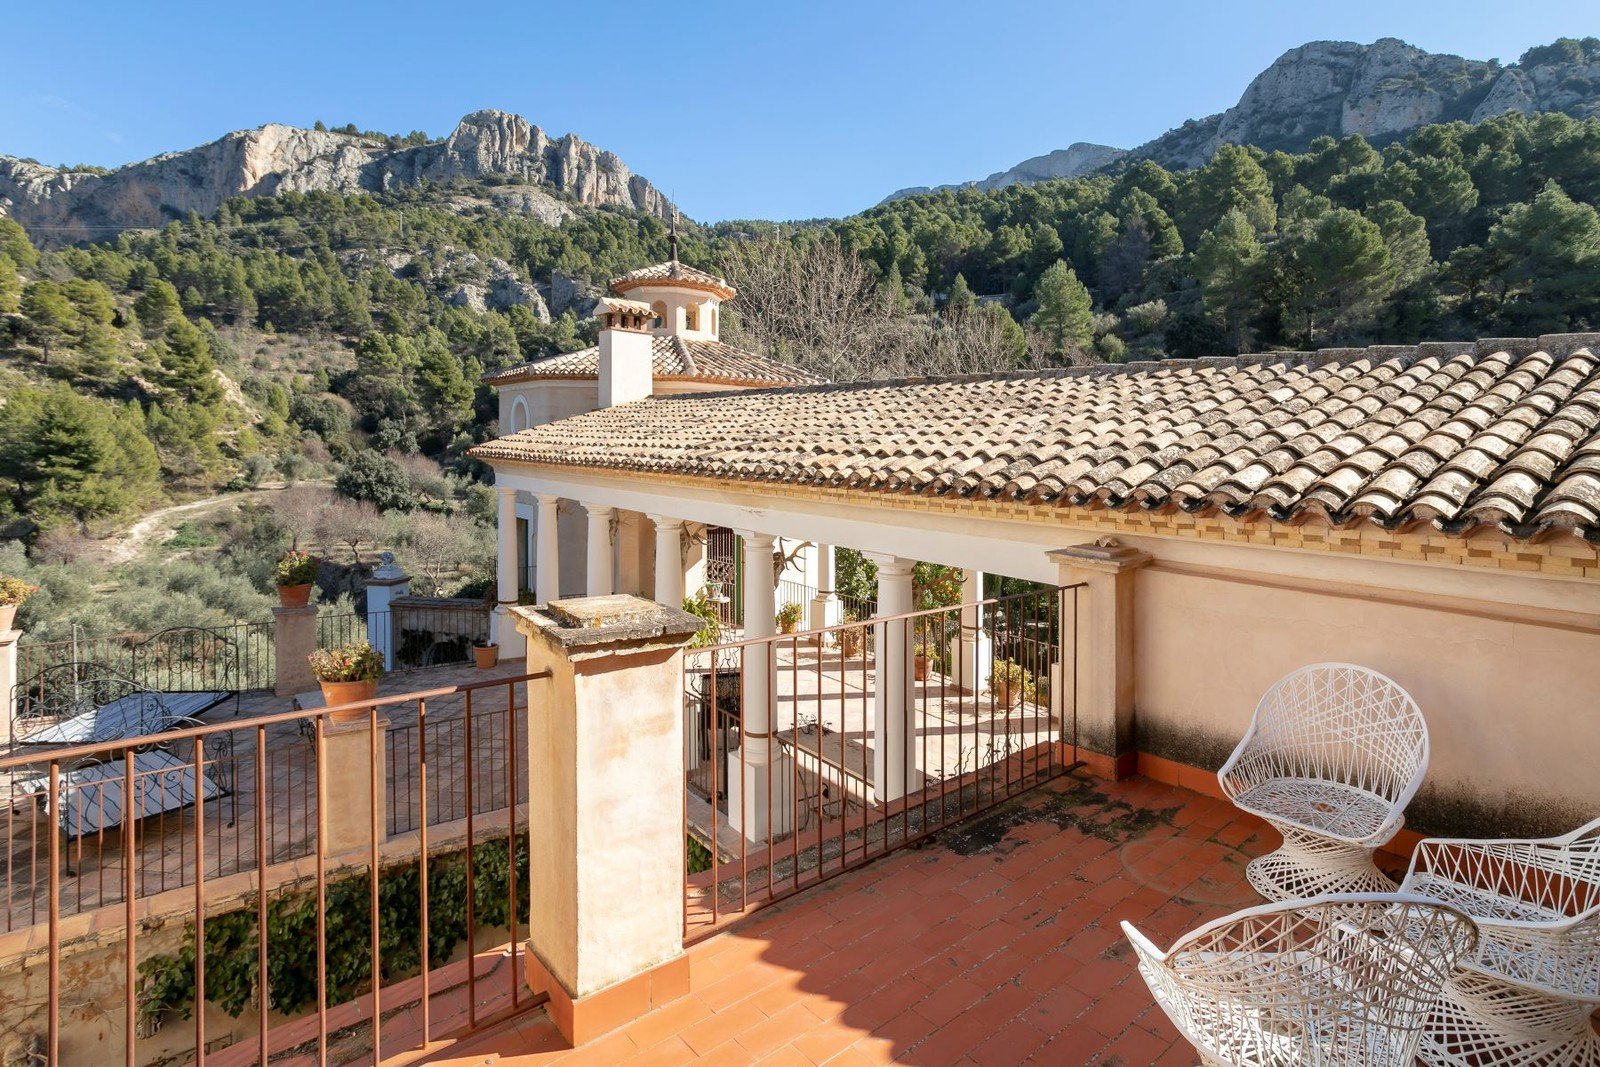 Francis York Stunning Hacienda in the Costa Blanca Hills Near Alicante, Spain 00011.jpeg